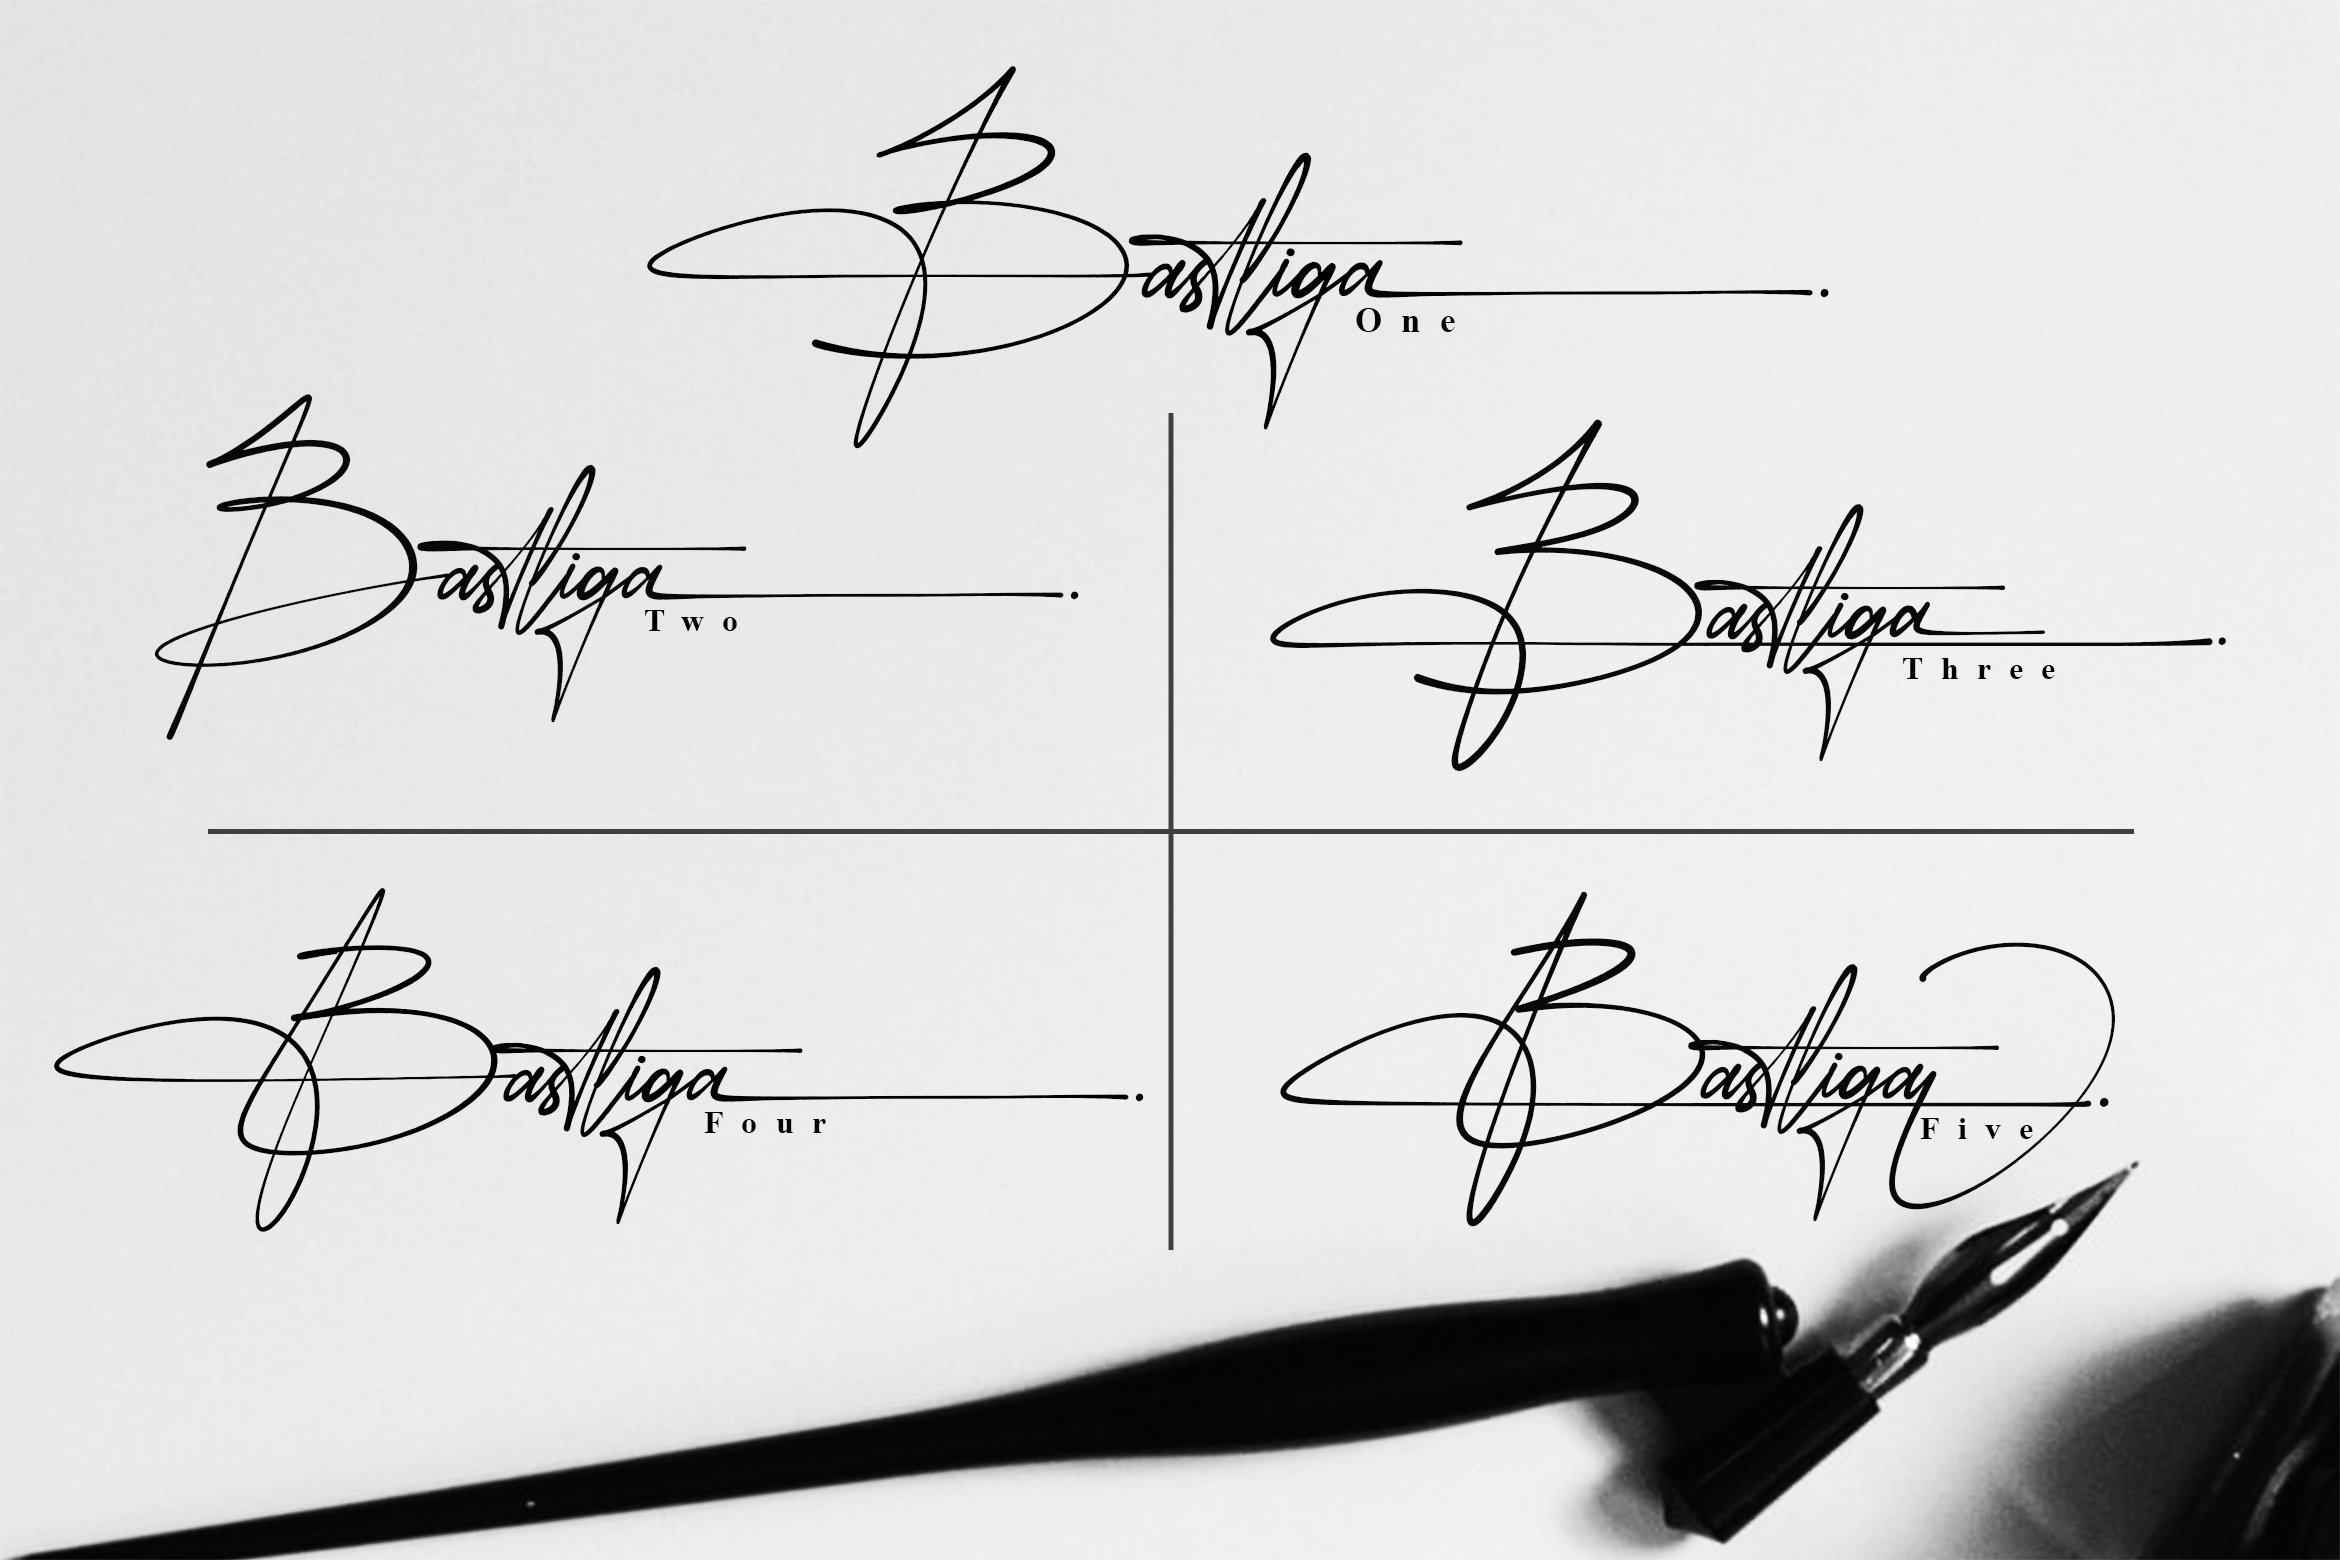 Bastliga 5 Realistic Signature Vol.1 preview image.